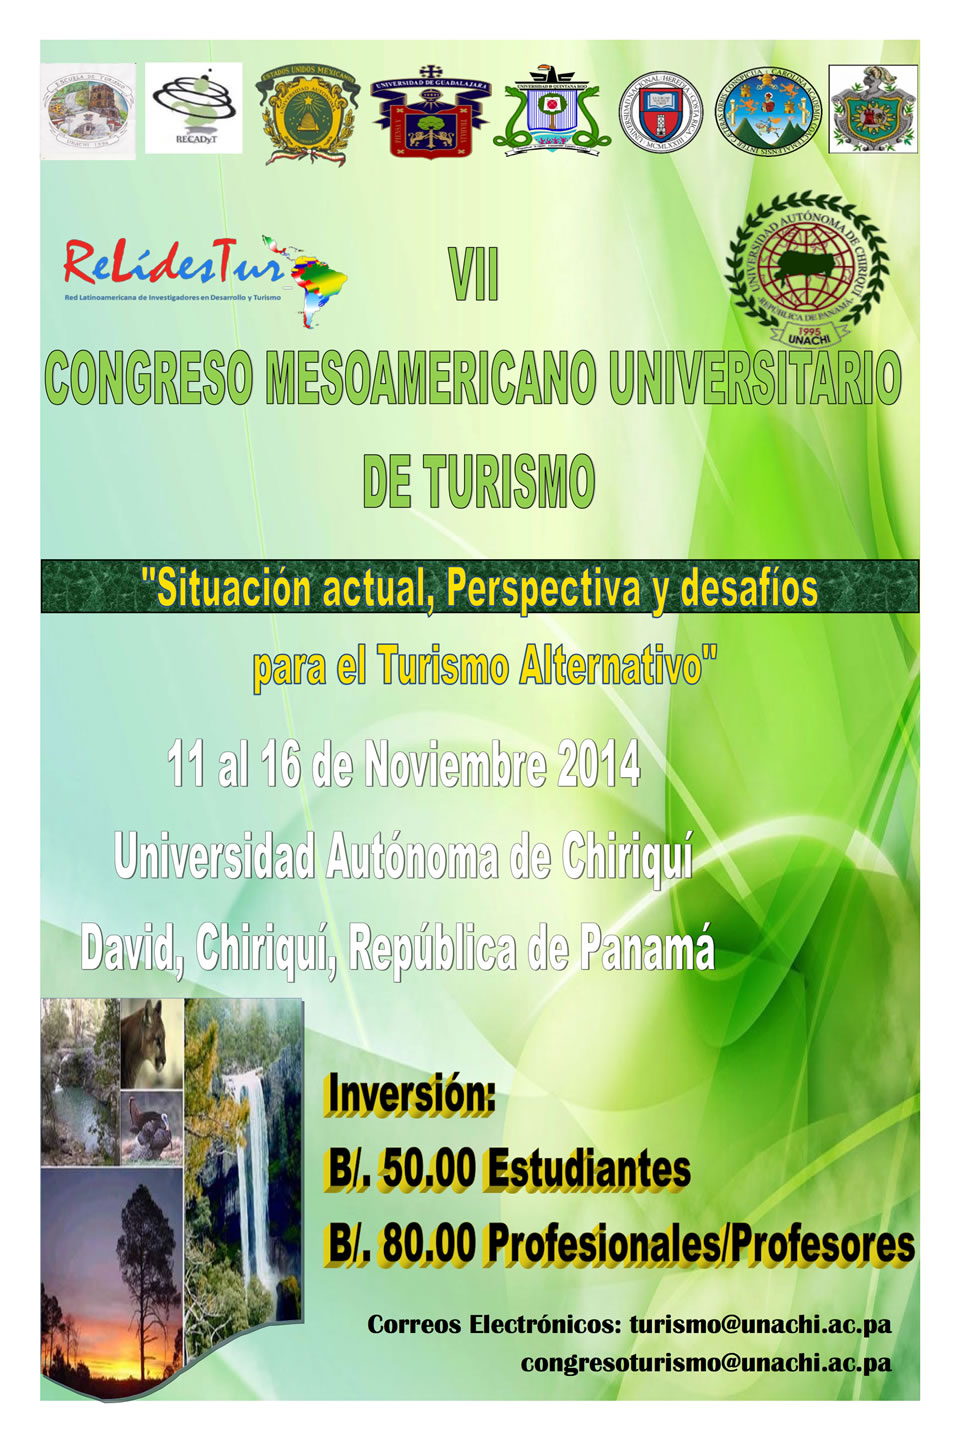 vii-congreso-mesoamericano-universitario-de-turismo-cartel.jpg